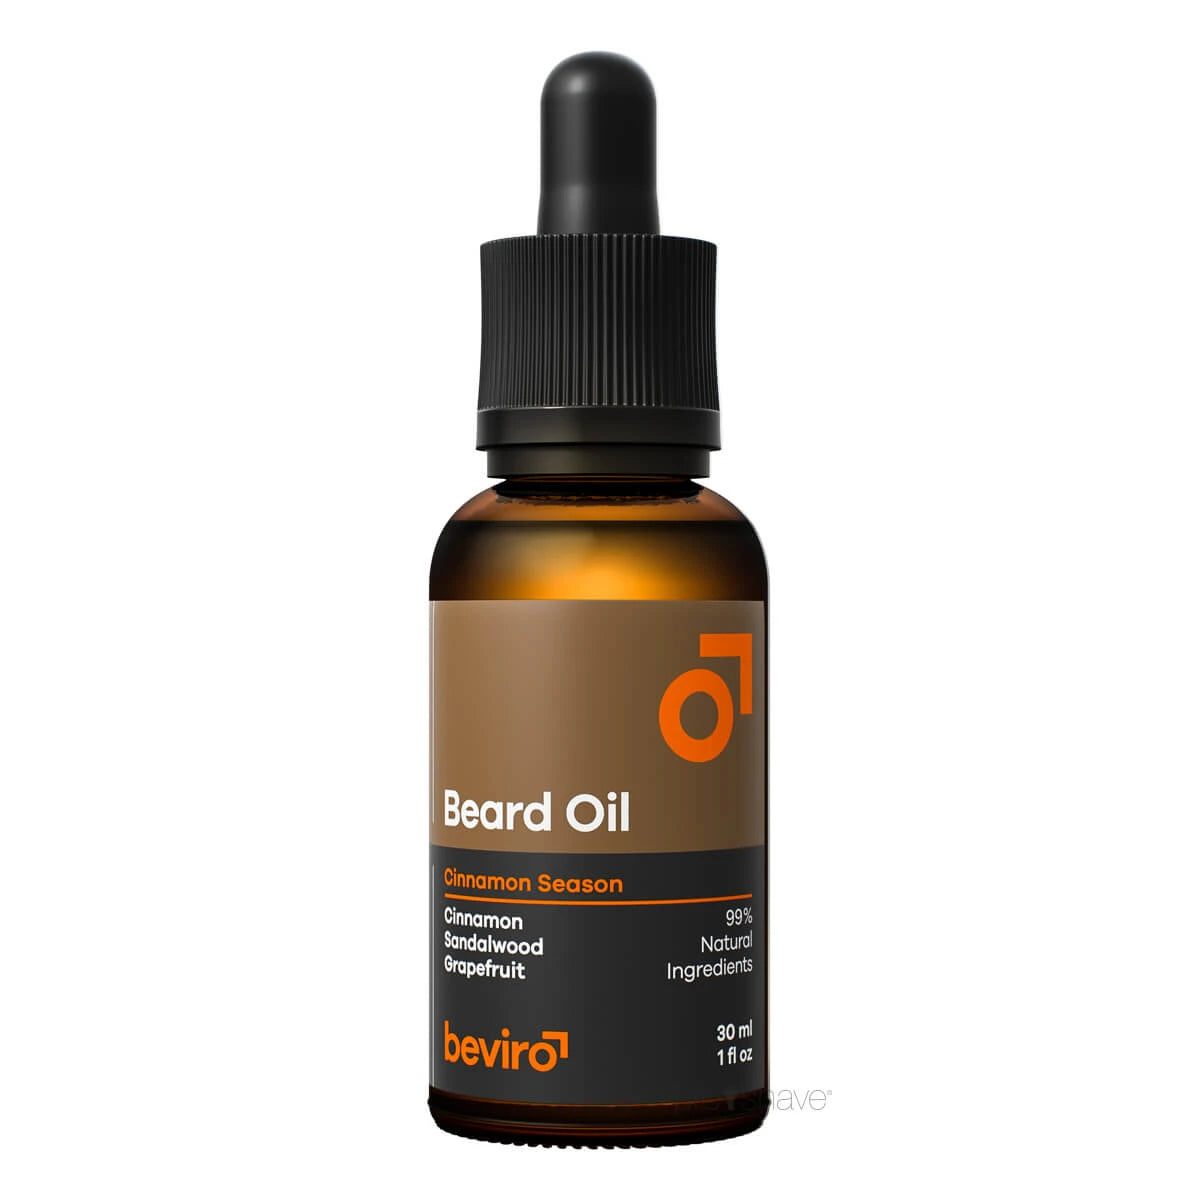 Beviro, Beard Oil- Cinnamon Season